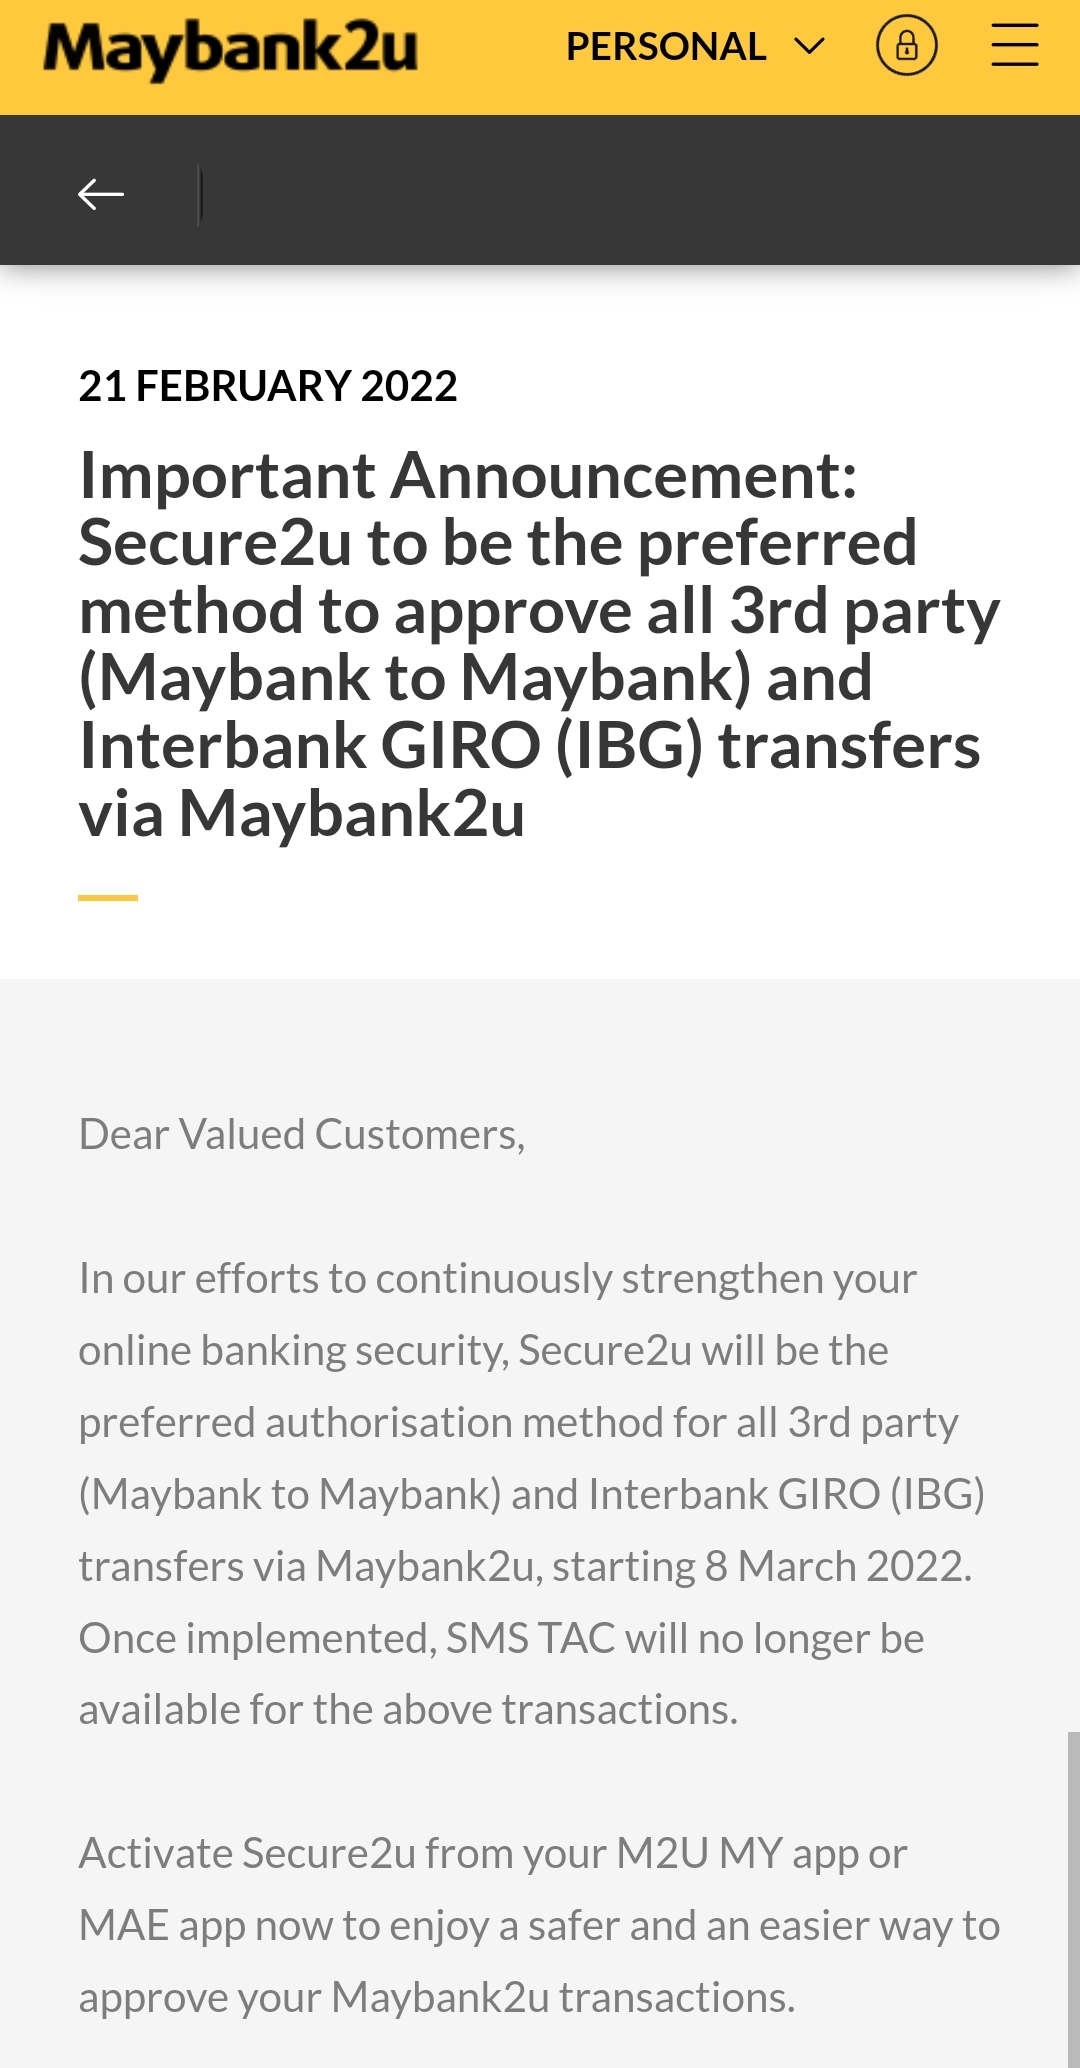 Maybank secure2u